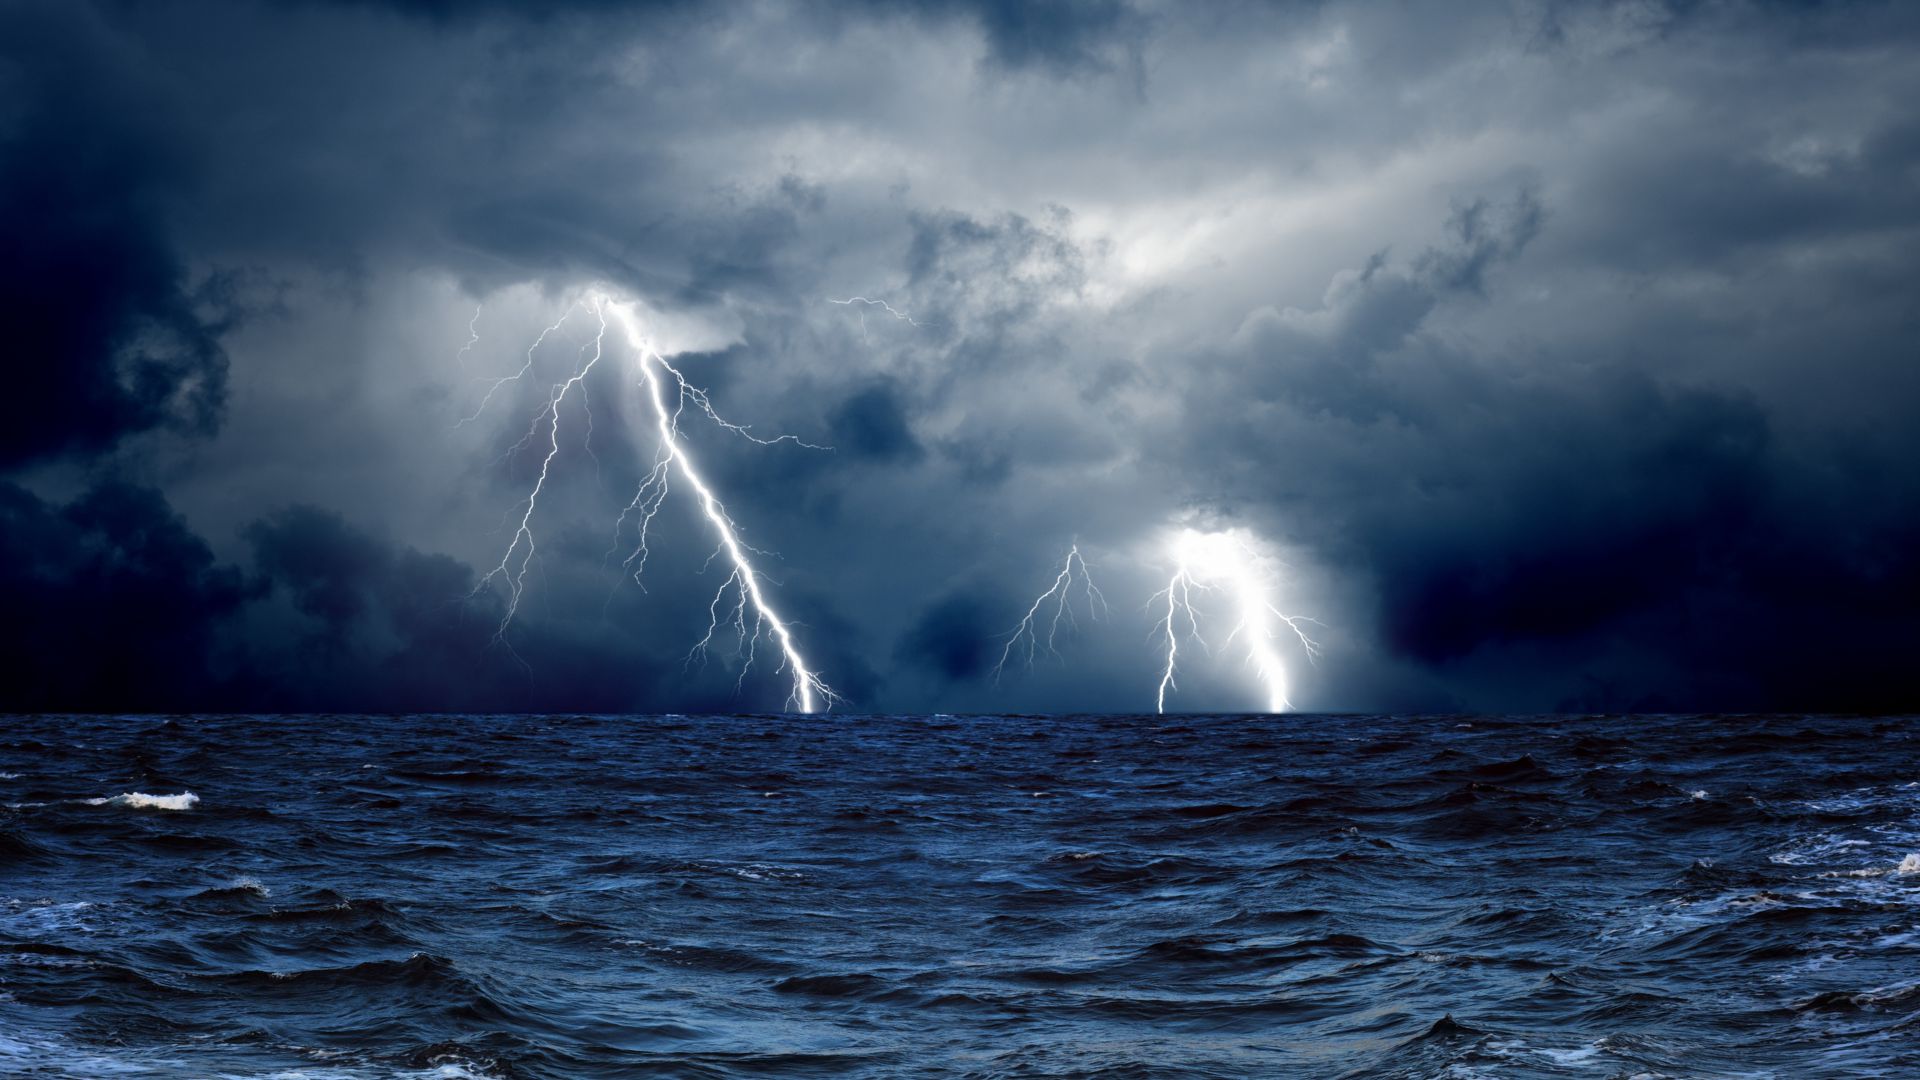 Sea, 5k, 4k wallpaper, 8k, ocean, storm, lightning, clouds (horizontal)